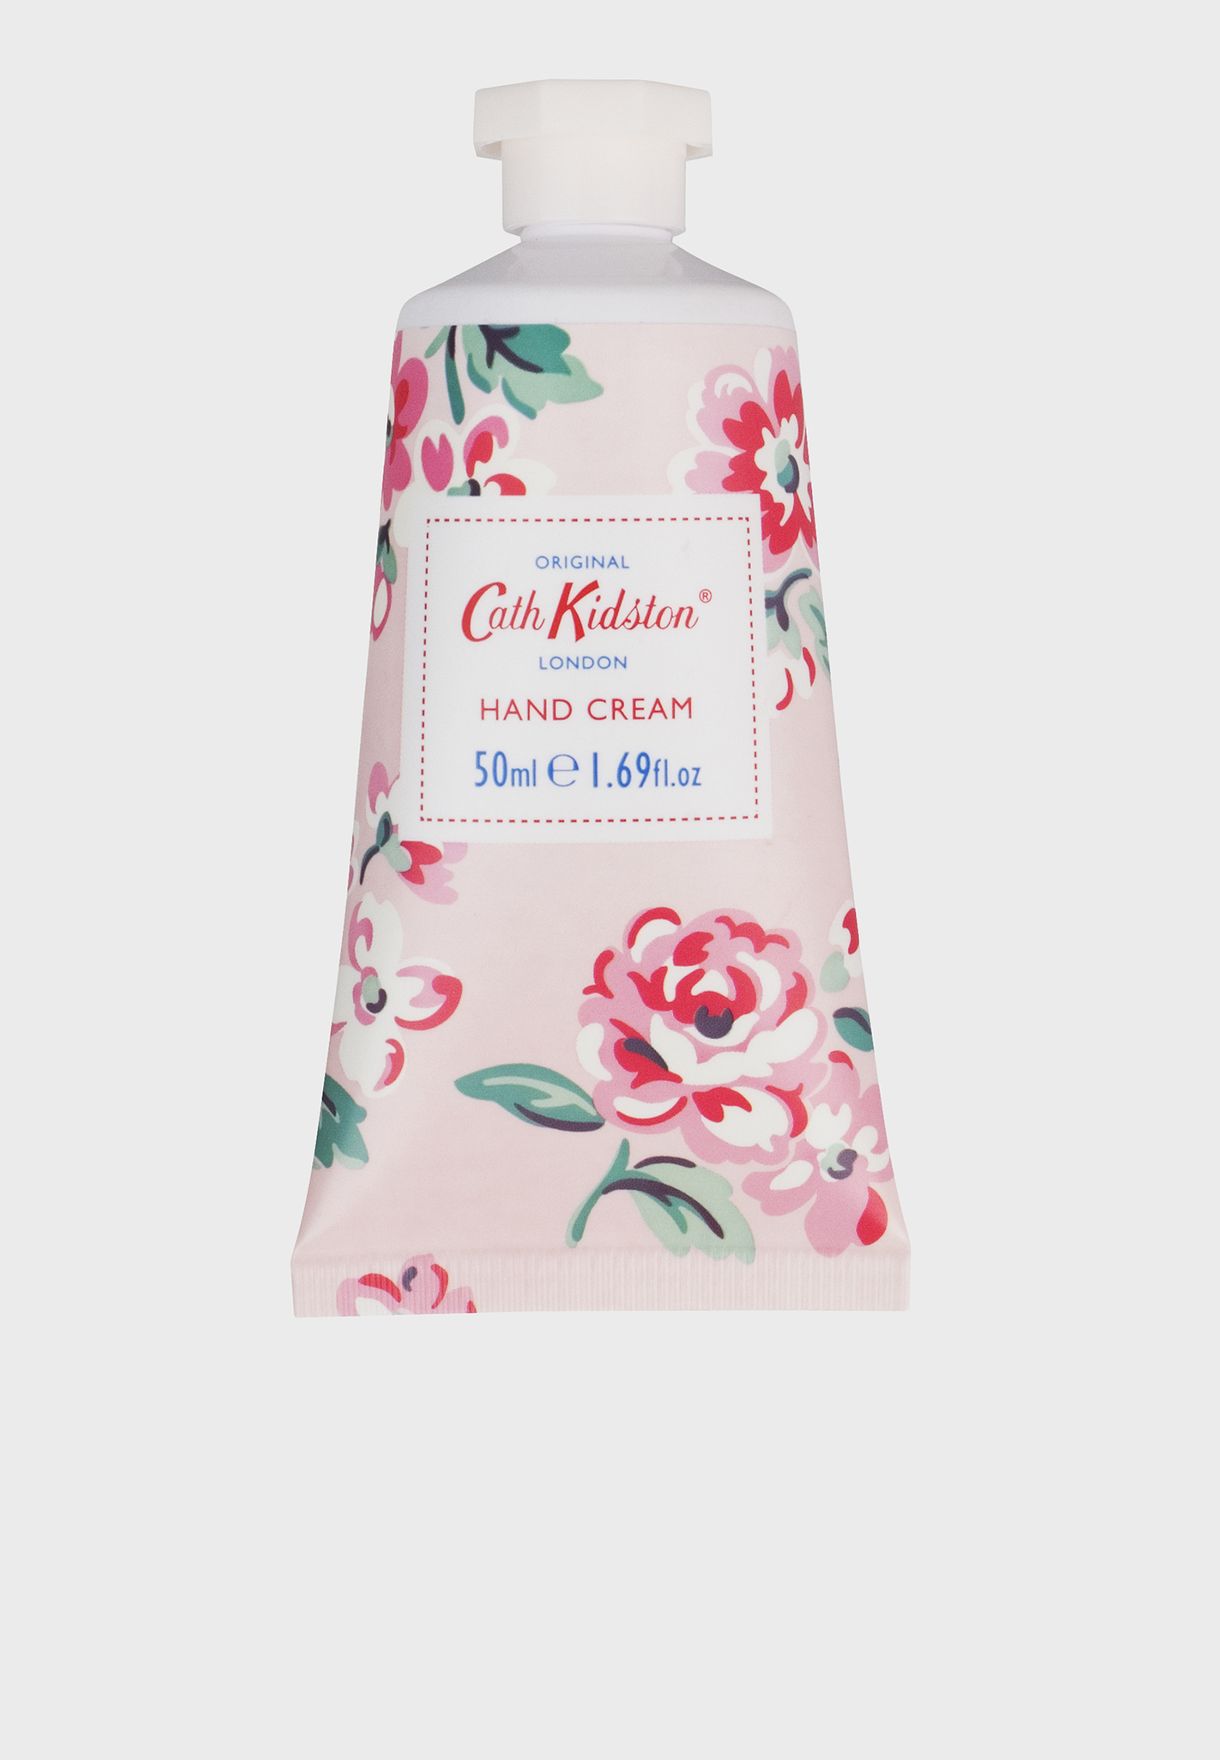 cath kidston rose hand cream